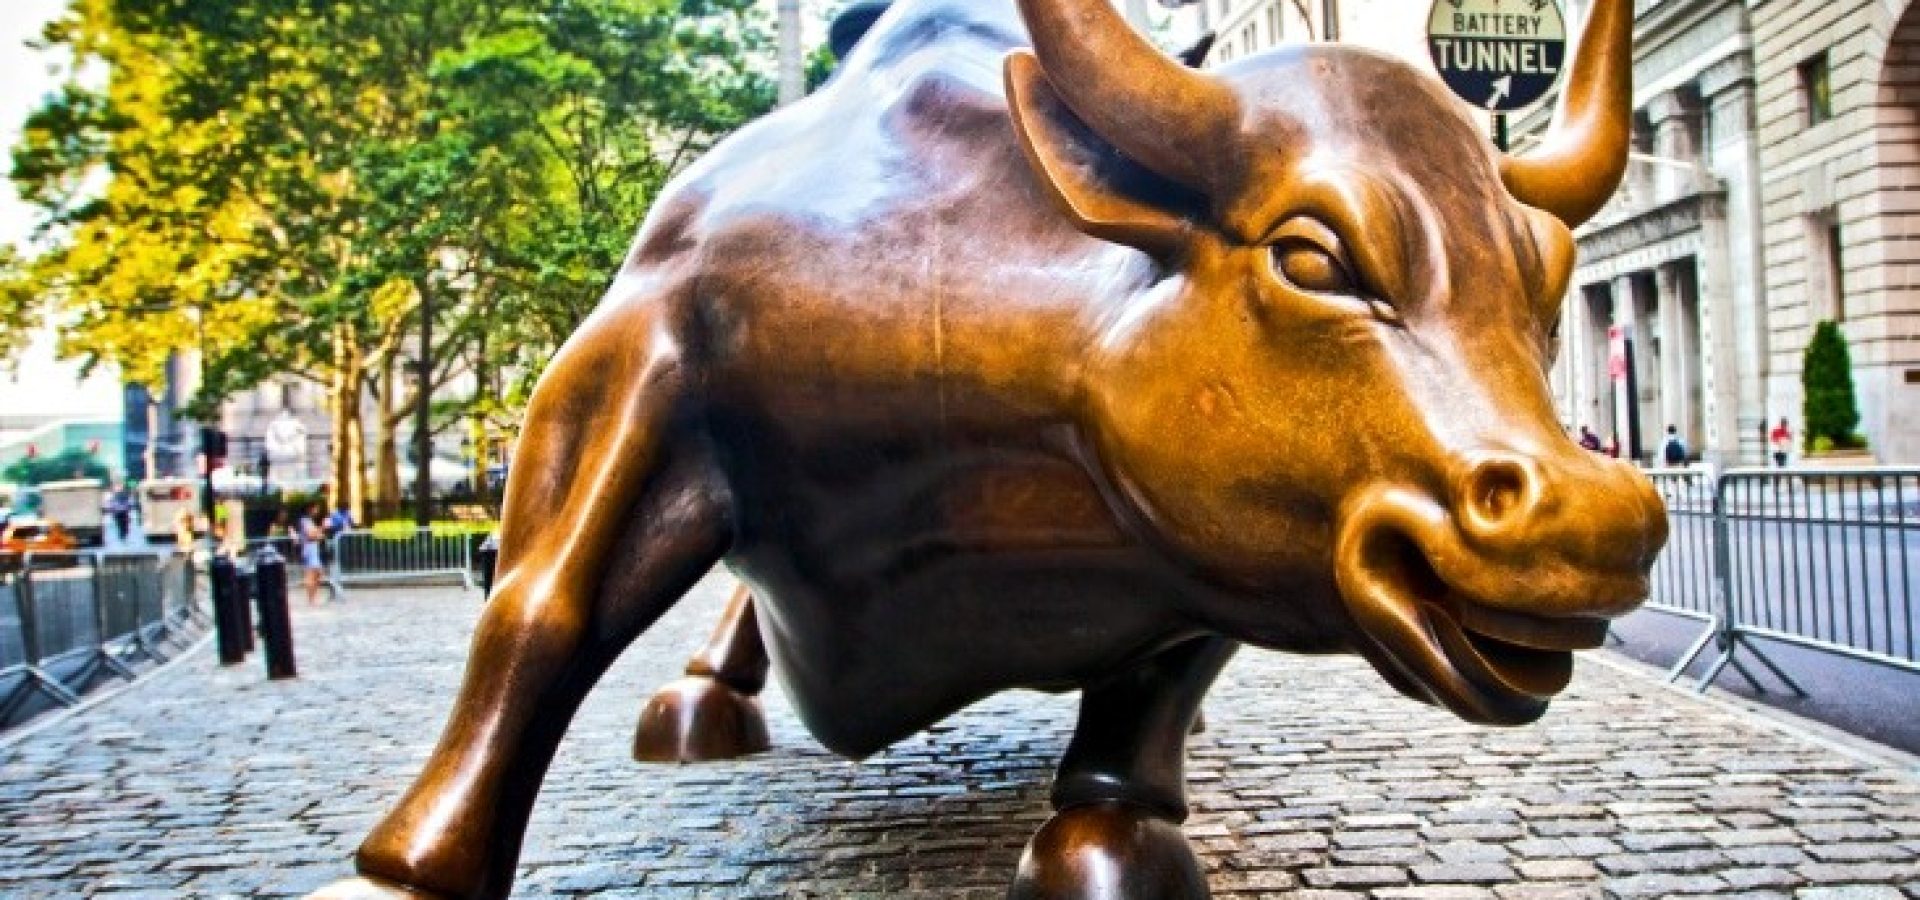 stock exchanges concept bull statue – wibestbroker